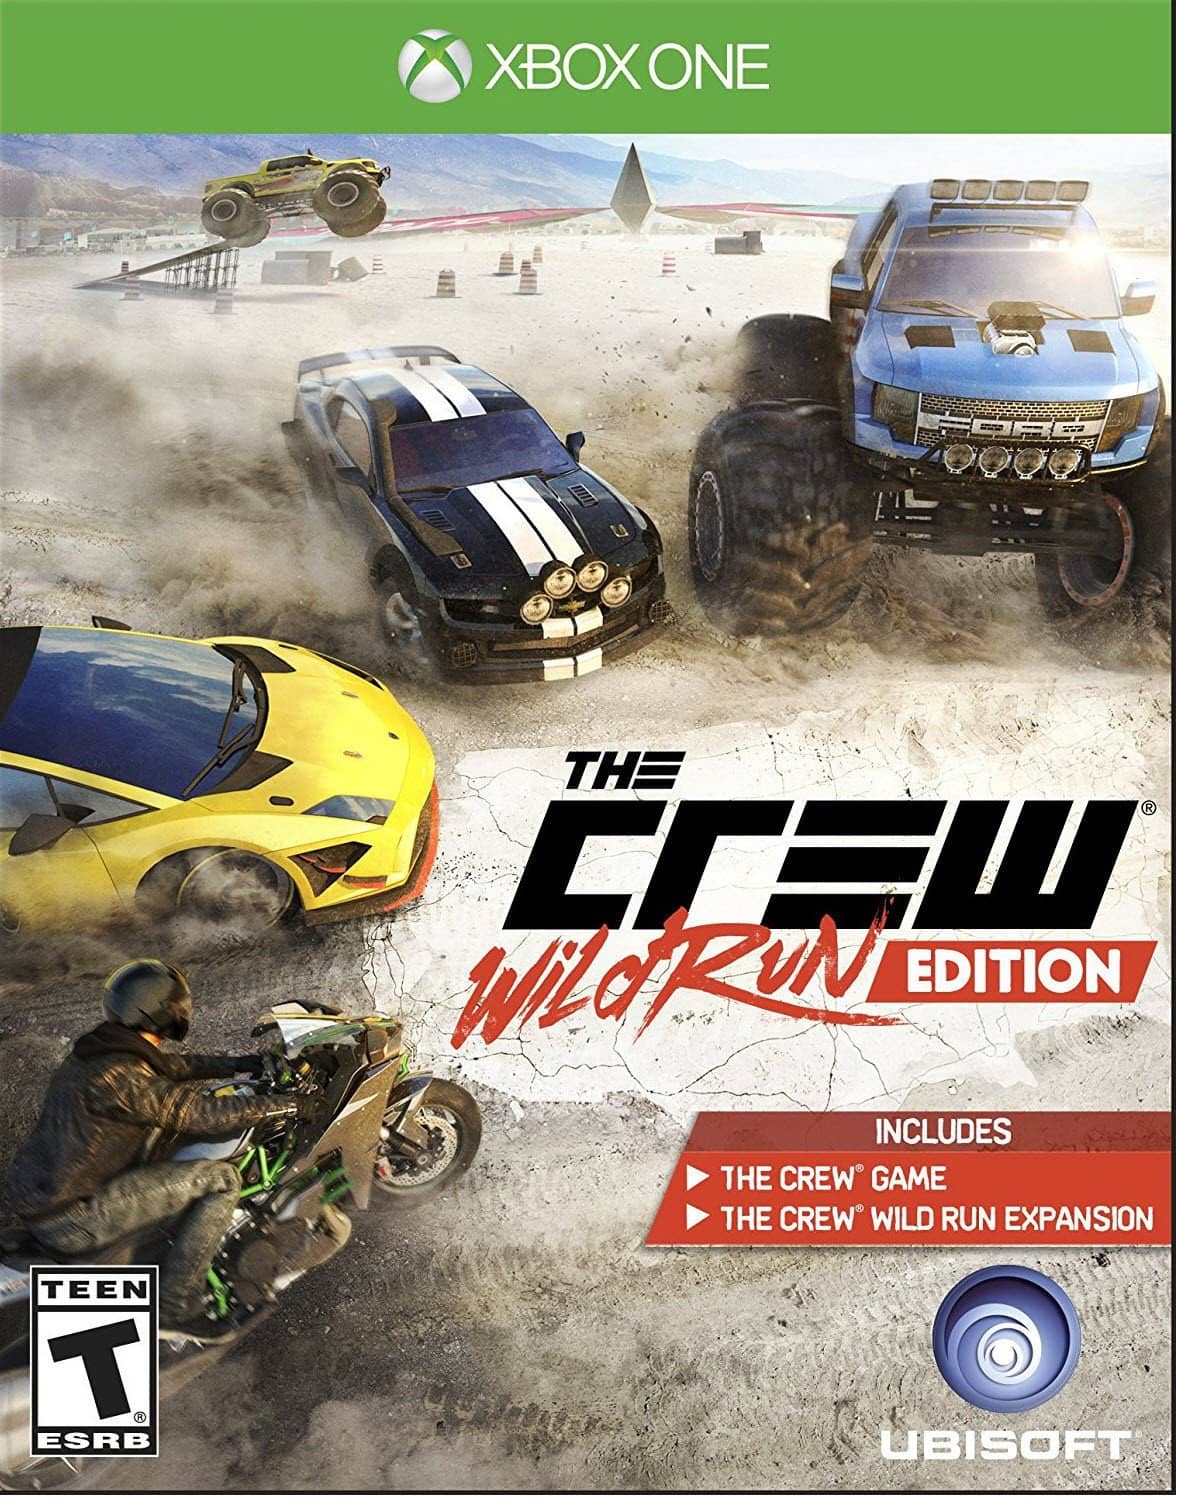 The Crew Wild Run Edition - Xbox One